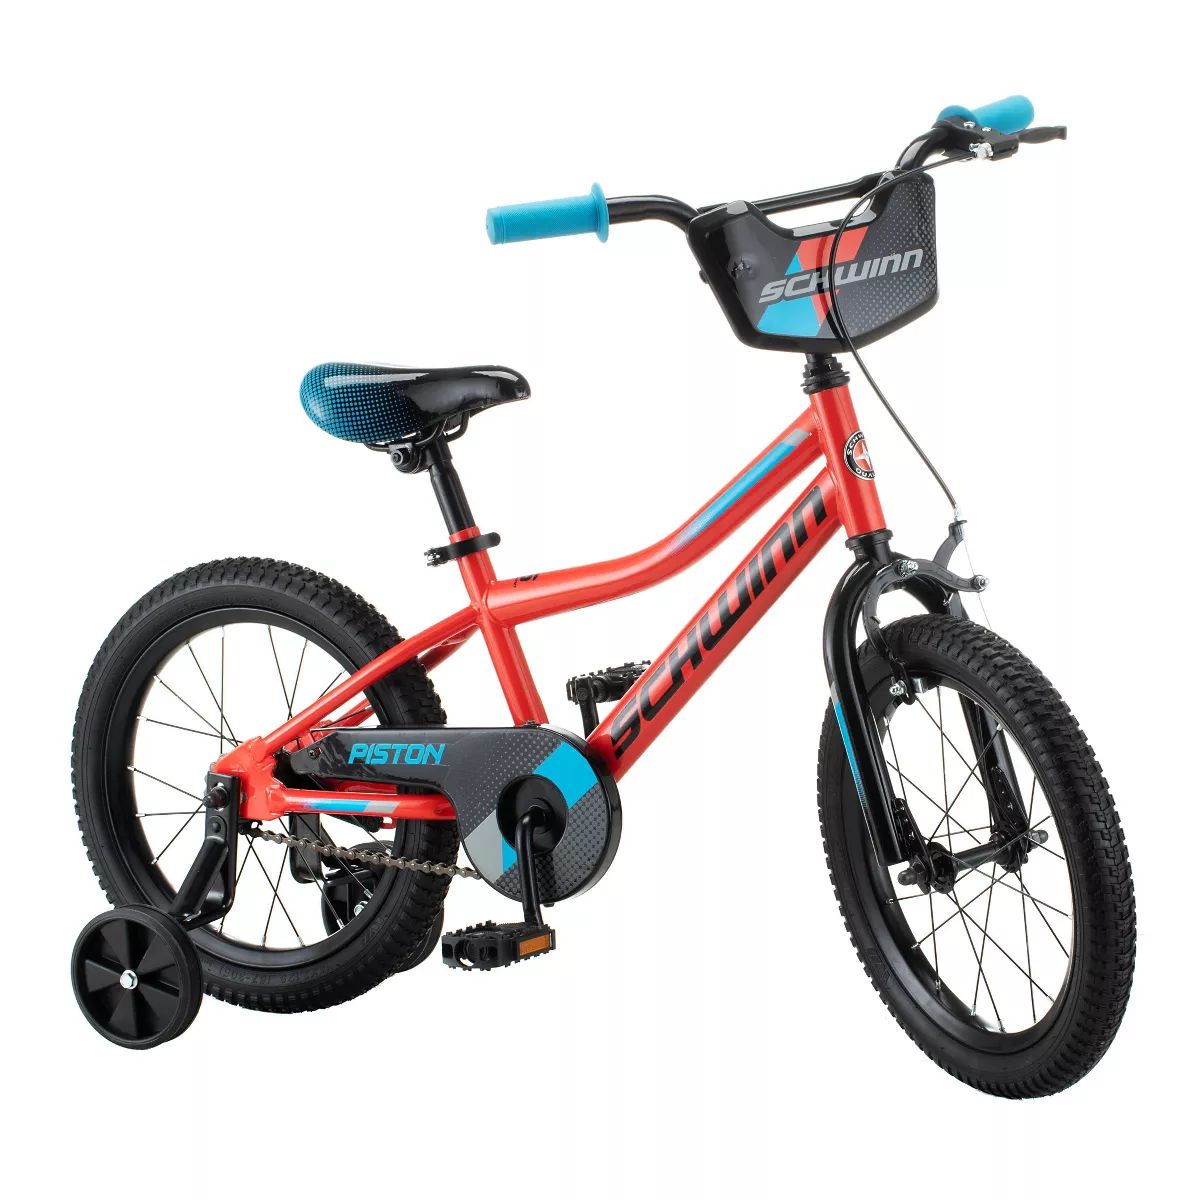 Schwinn Piston 16" Kids' Bike - Black/Blue/Red | Target